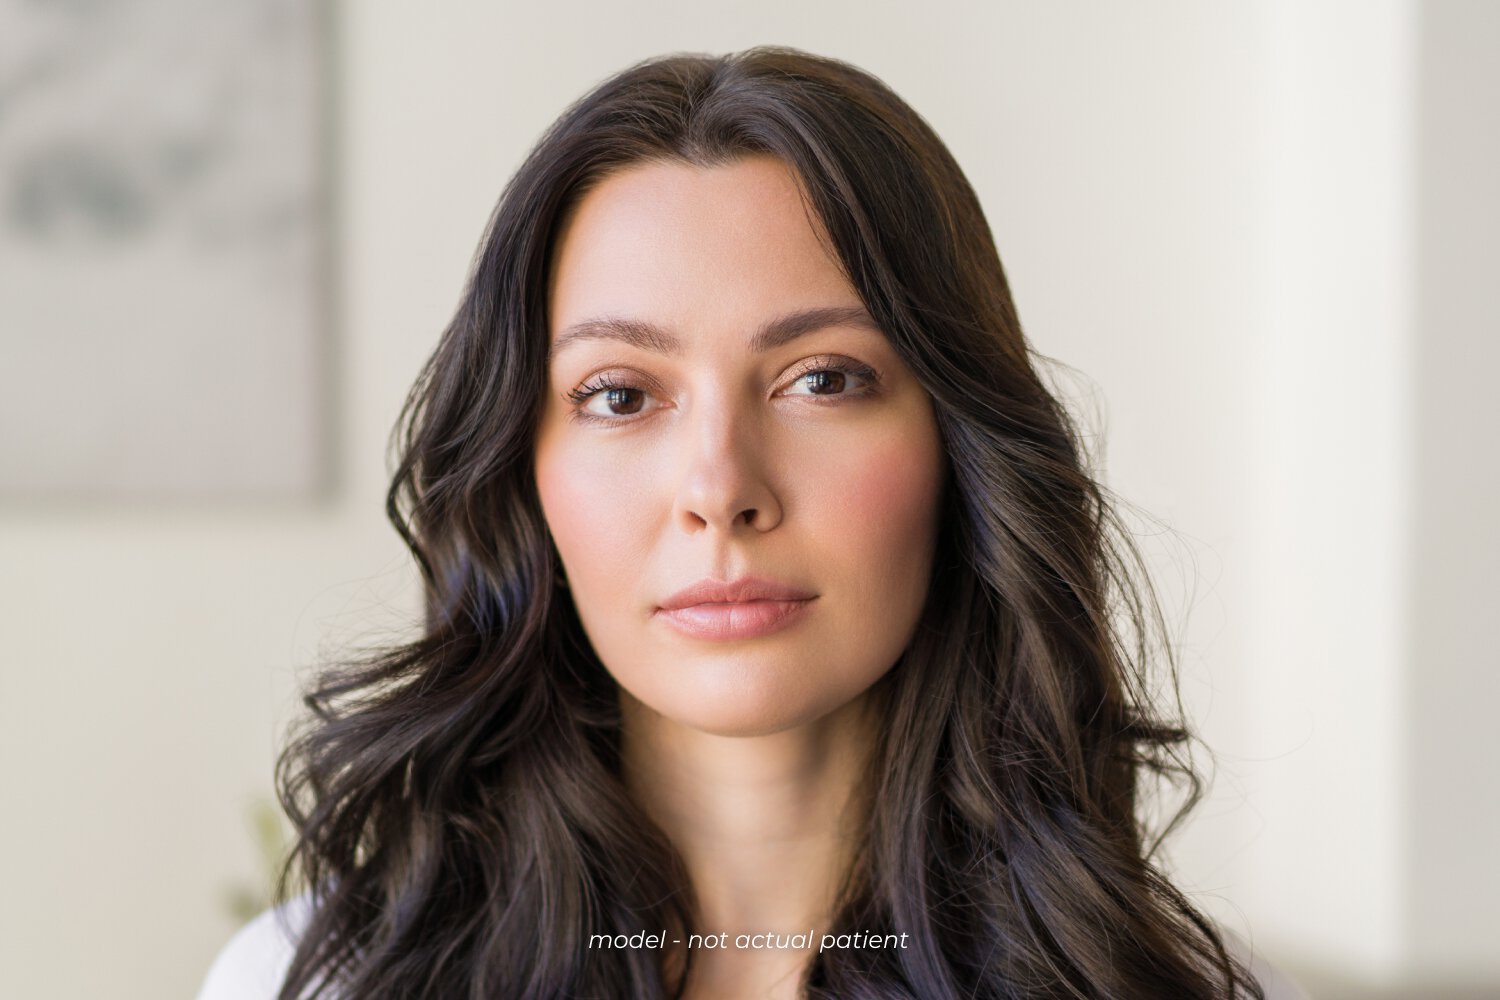 Nose procedures feature - Brunette woman with symmetrical face